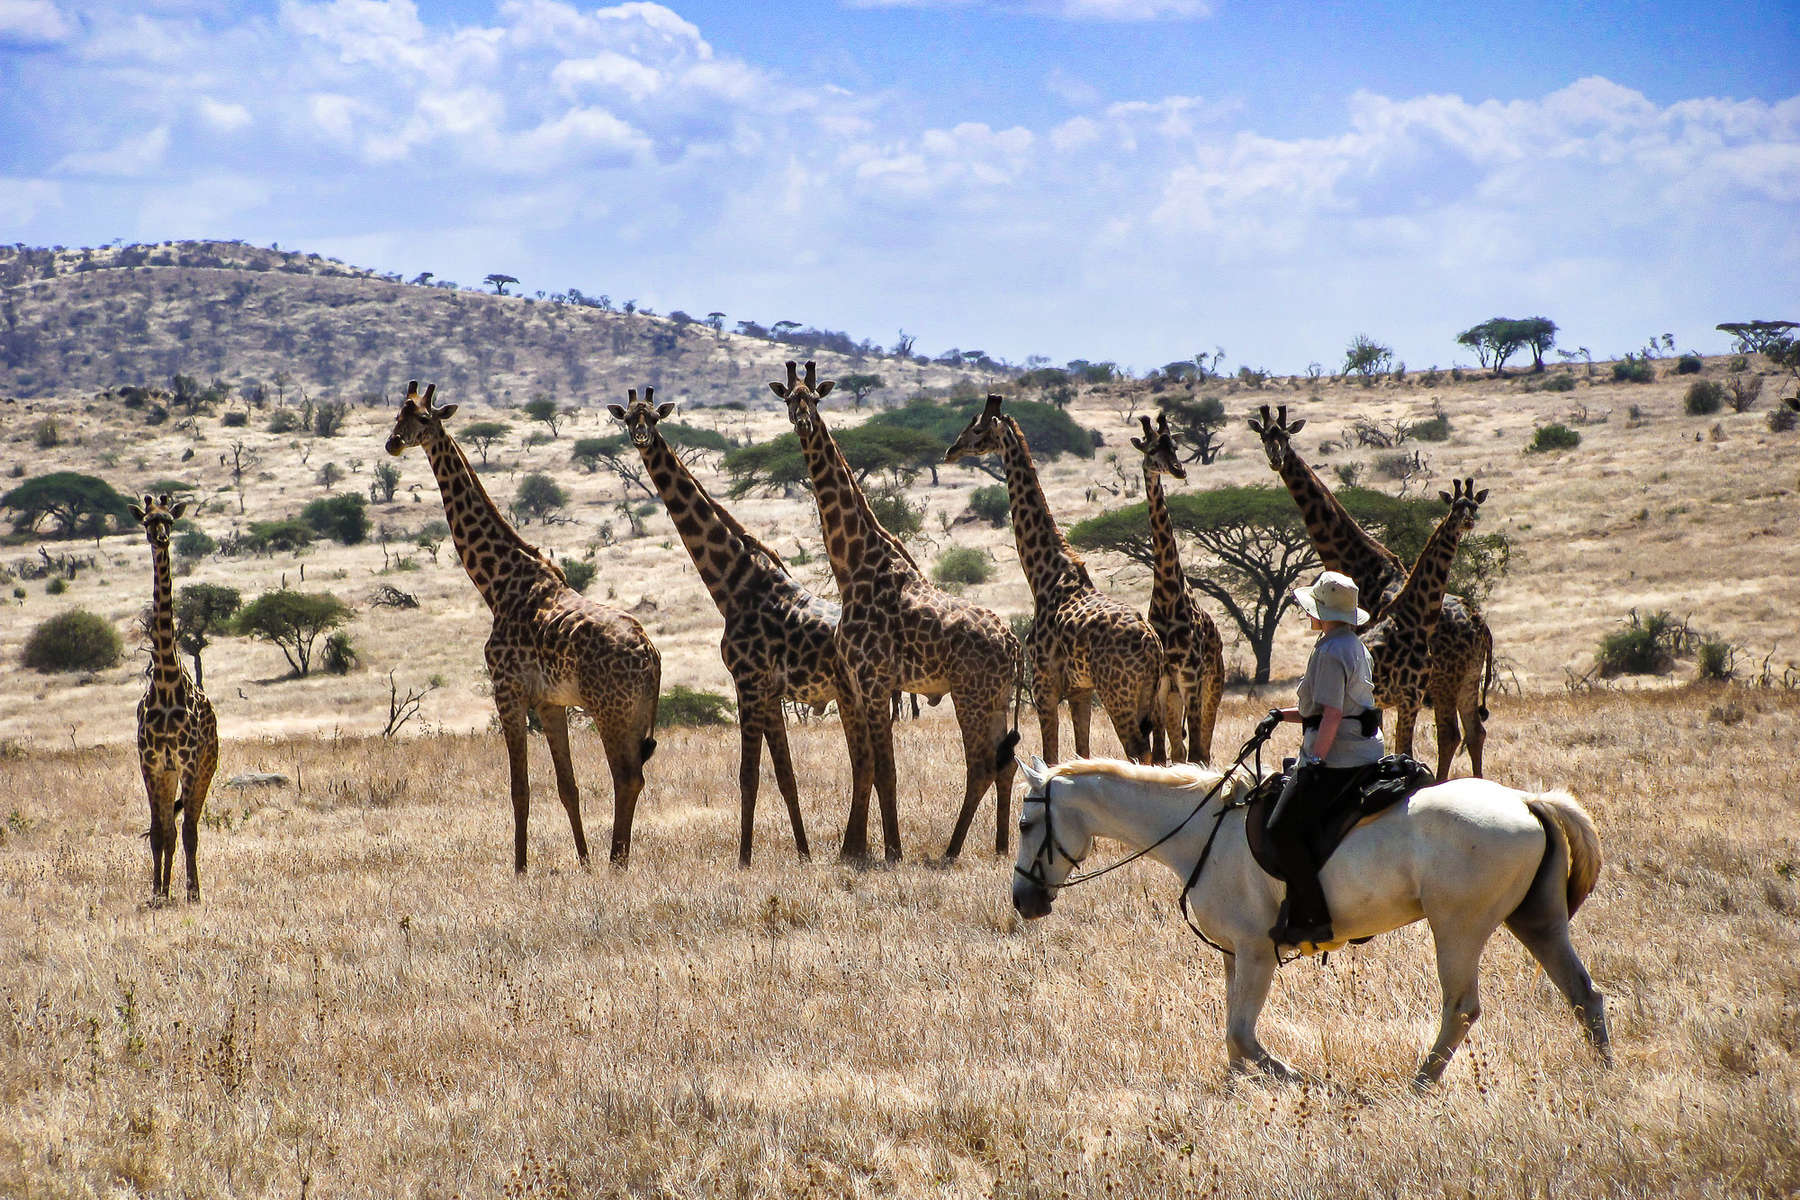 A tower of giraffe seen from horseback in Tanzania